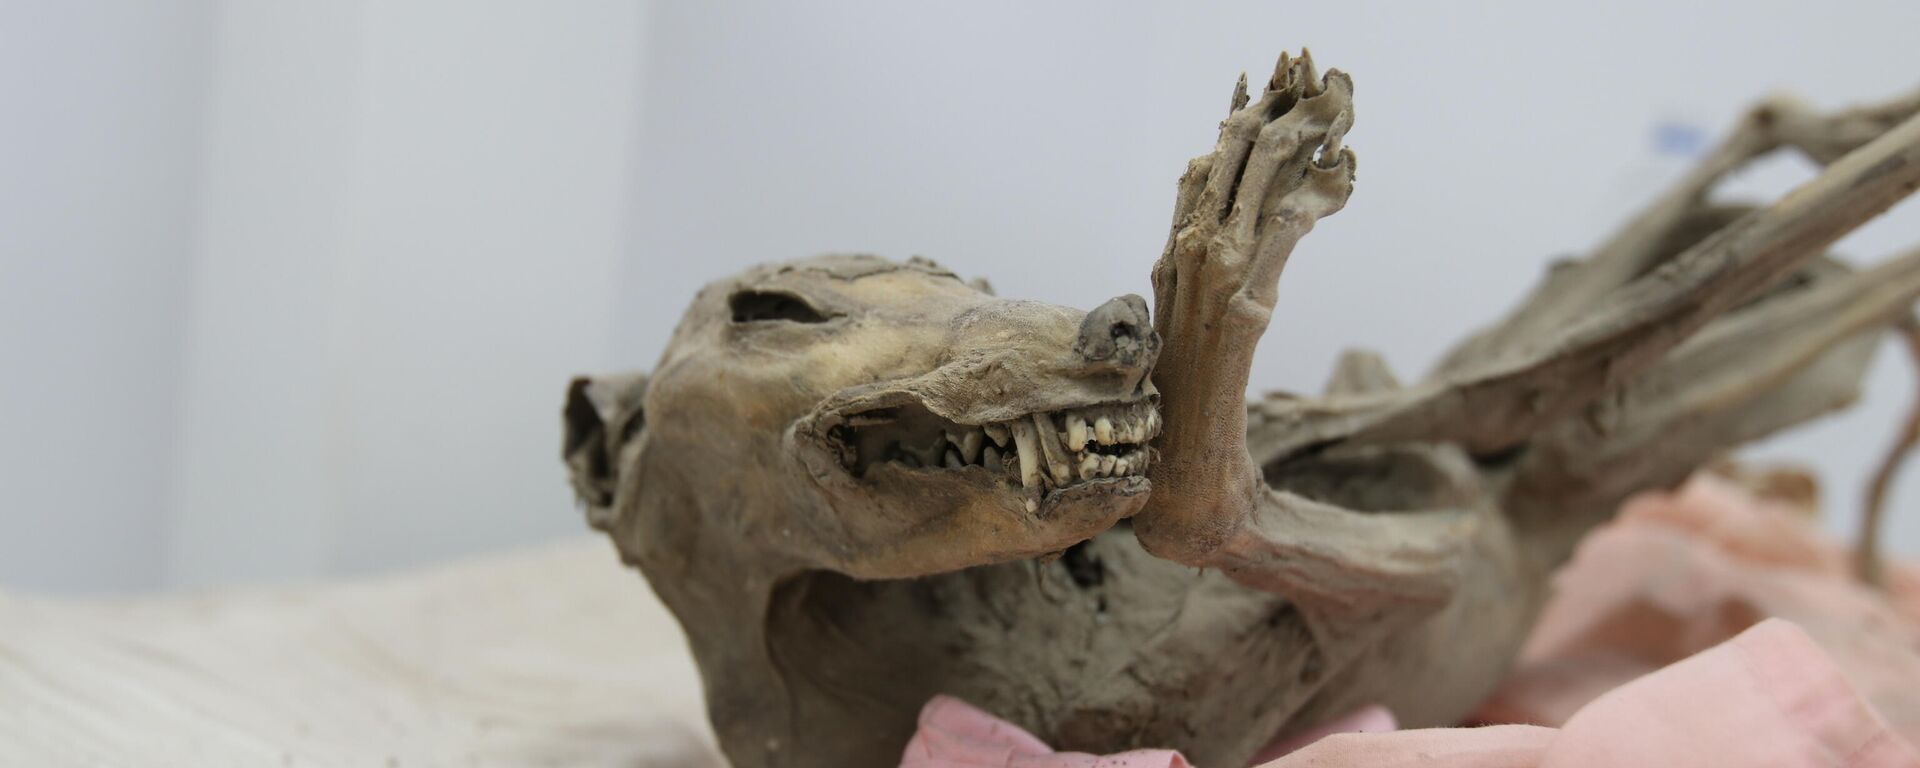 Мумия собаки, найденная в Согде - Sputnik Таджикистан, 1920, 09.08.2021